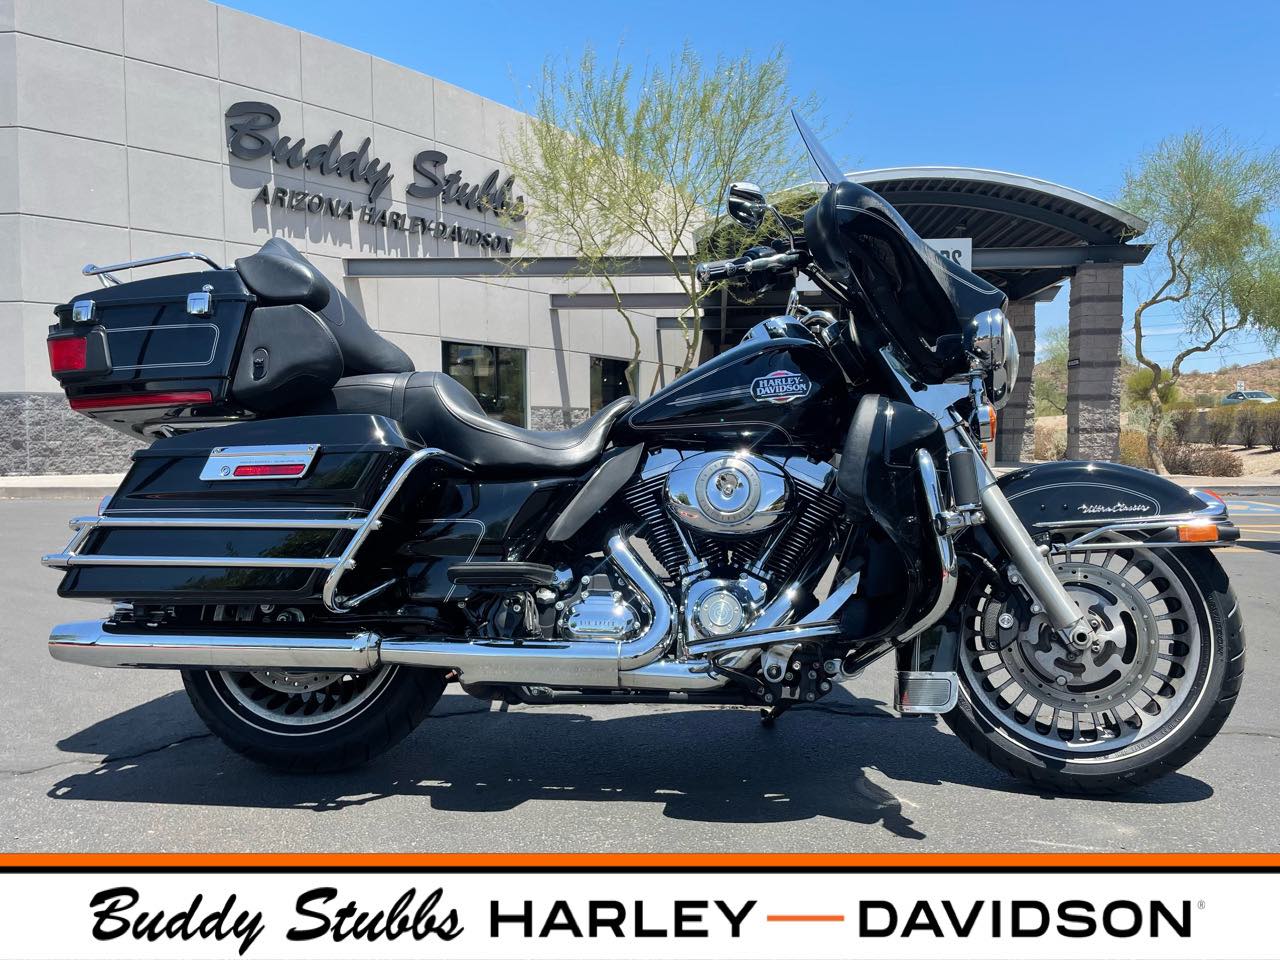 2011 Harley-Davidson Electra Glide Ultra Classic at Buddy Stubbs Arizona Harley-Davidson